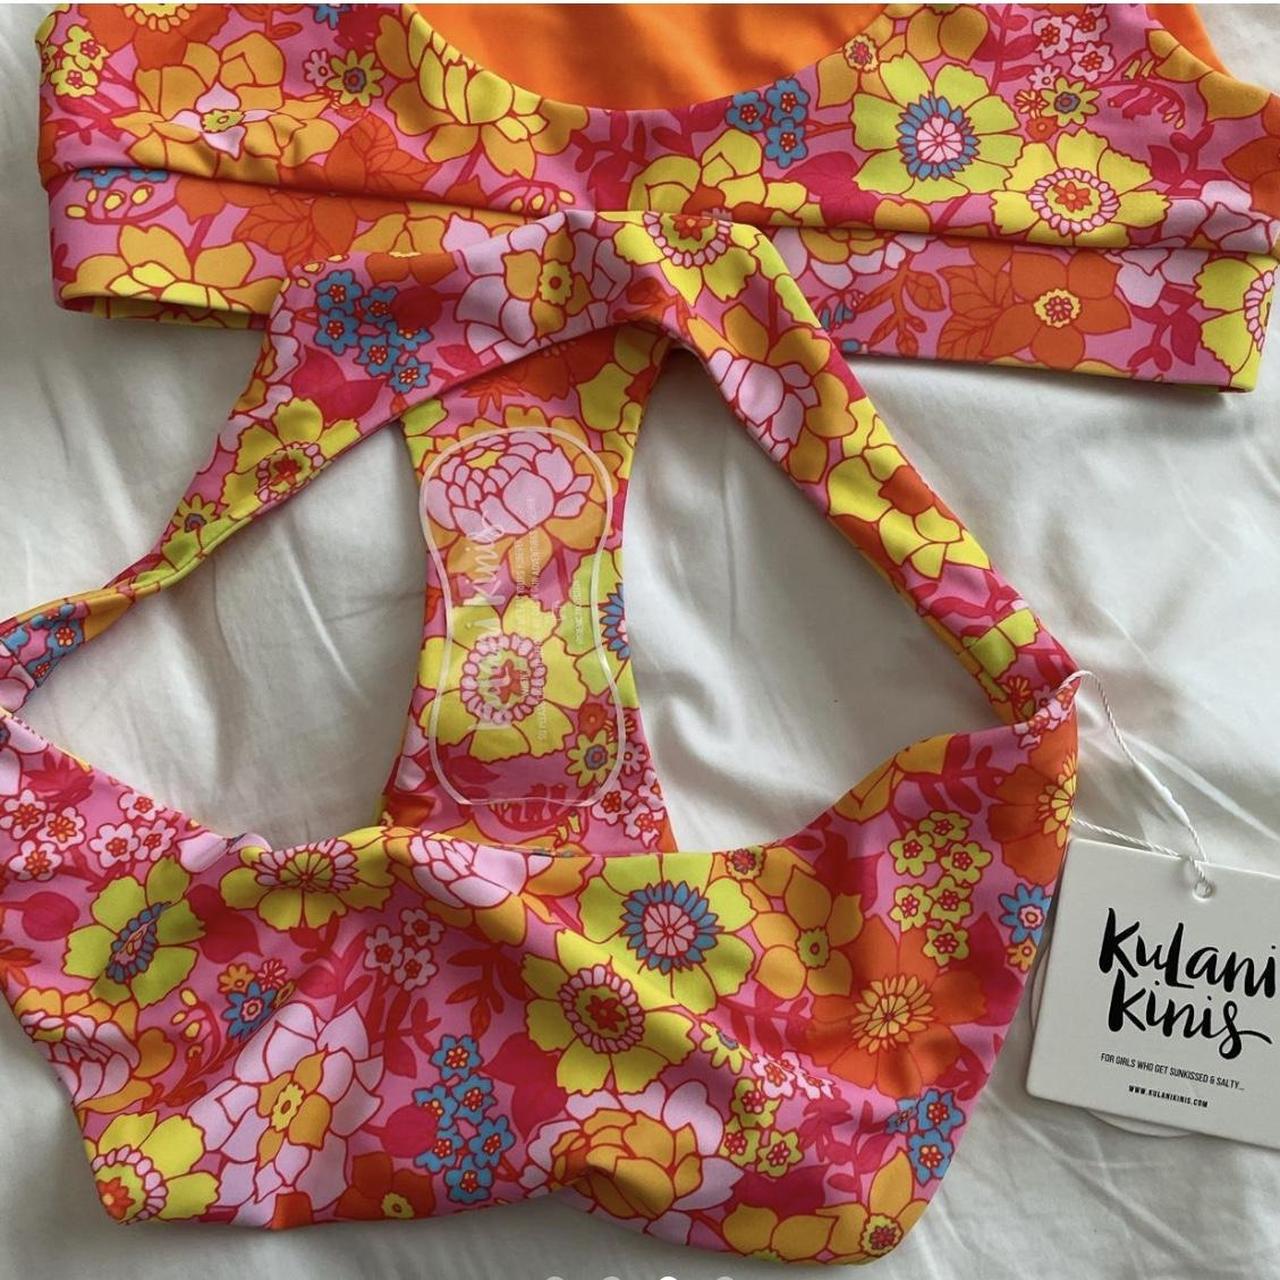 Kulani Kinis Women's Orange and Pink Bikinis-and-tankini-sets (3)